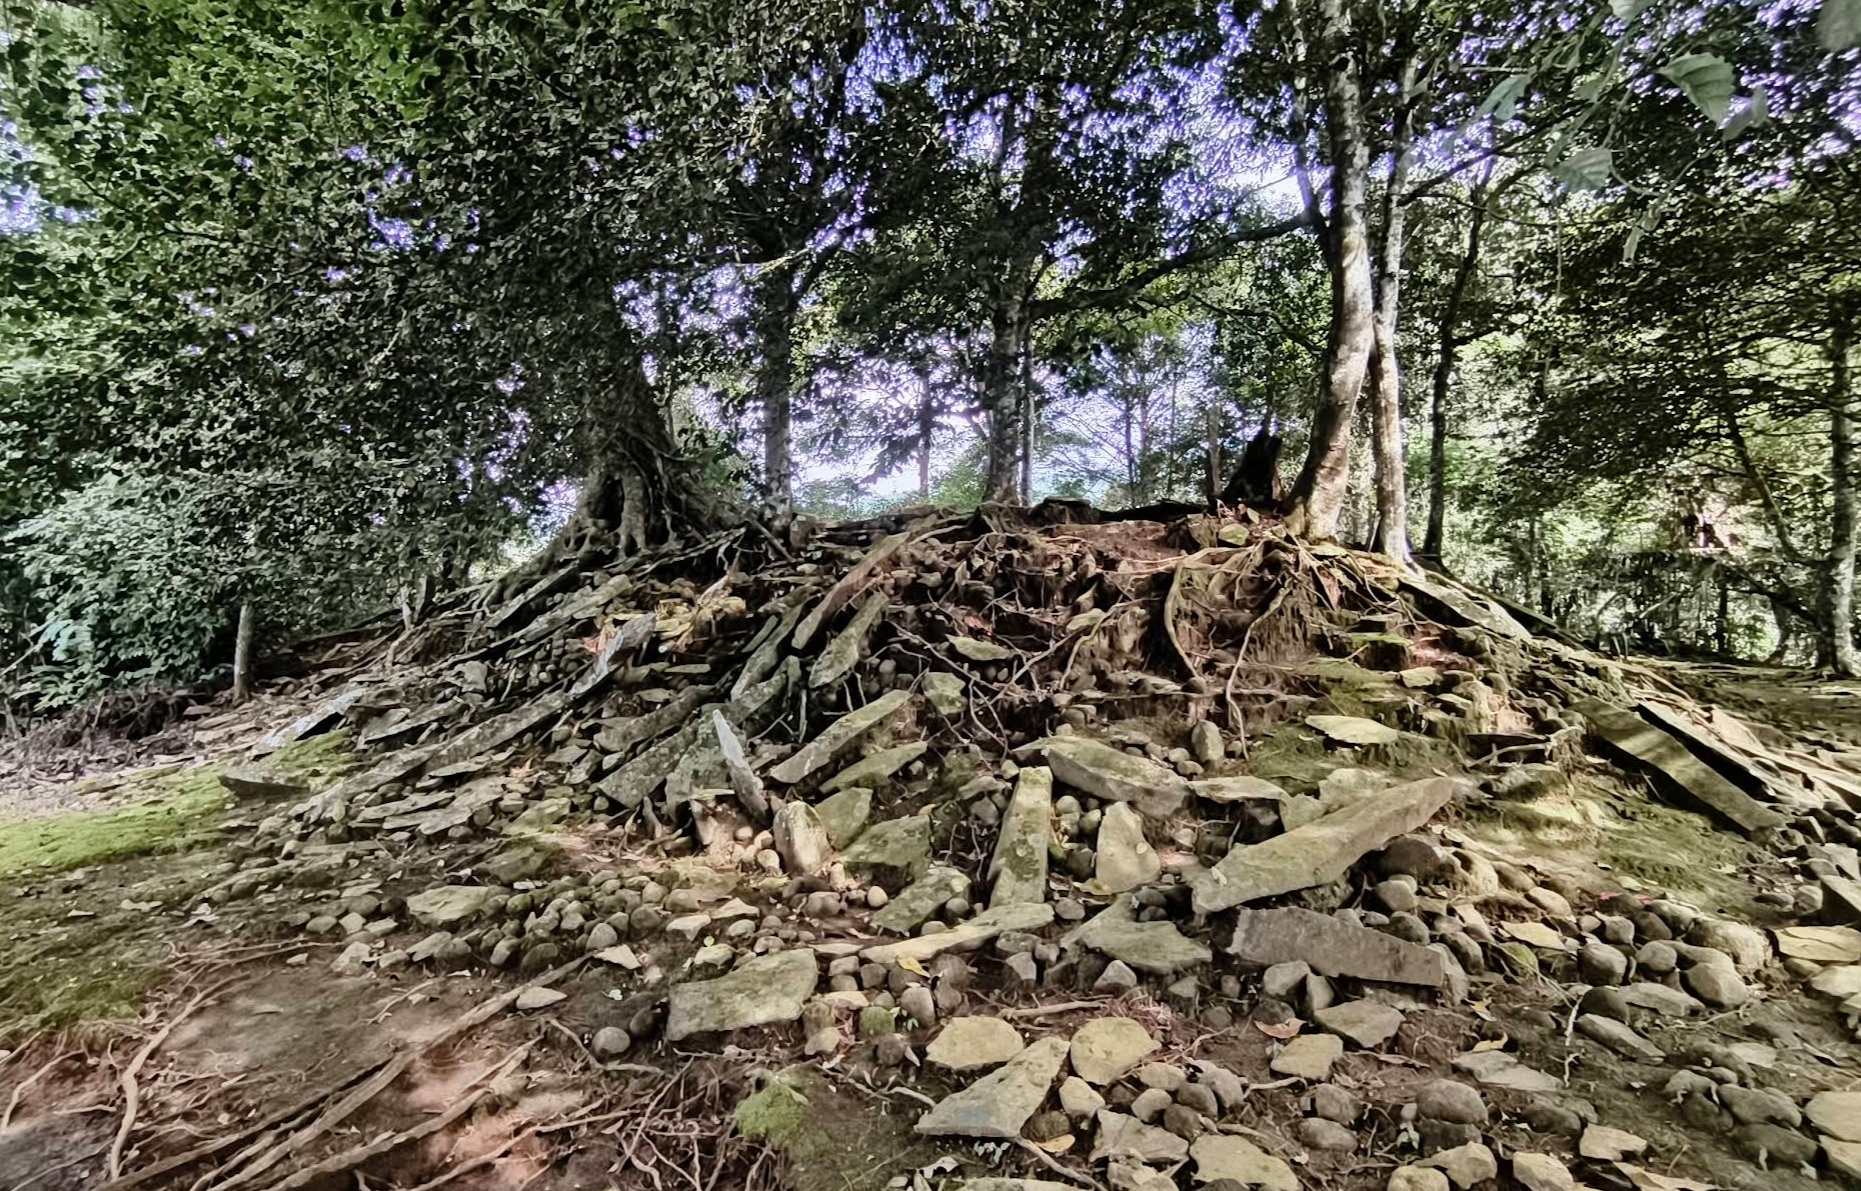 Situs Lingga di Kuningan Mirip Gunung Padang, Banyak Batu Besar Berserakan, Berbentuk Piramida?